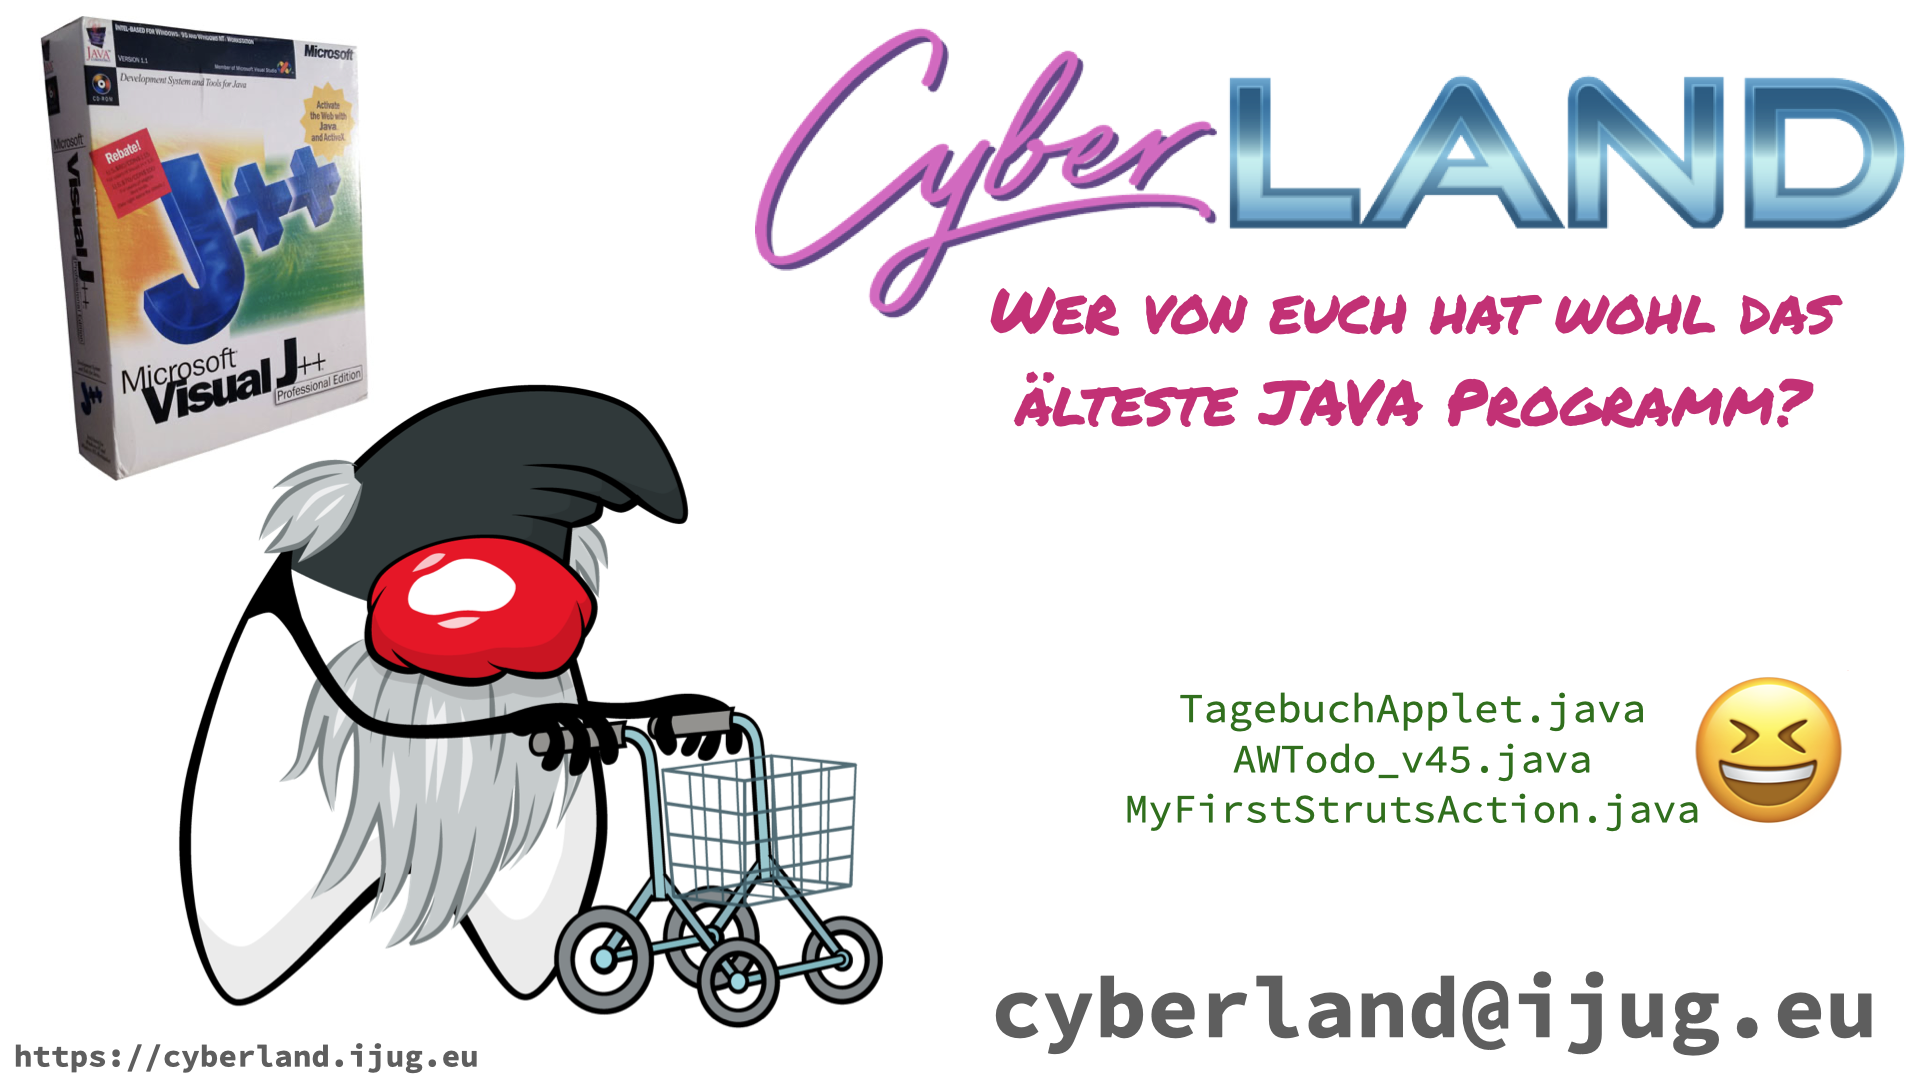 Schickt Euer ältestes Java-Programm